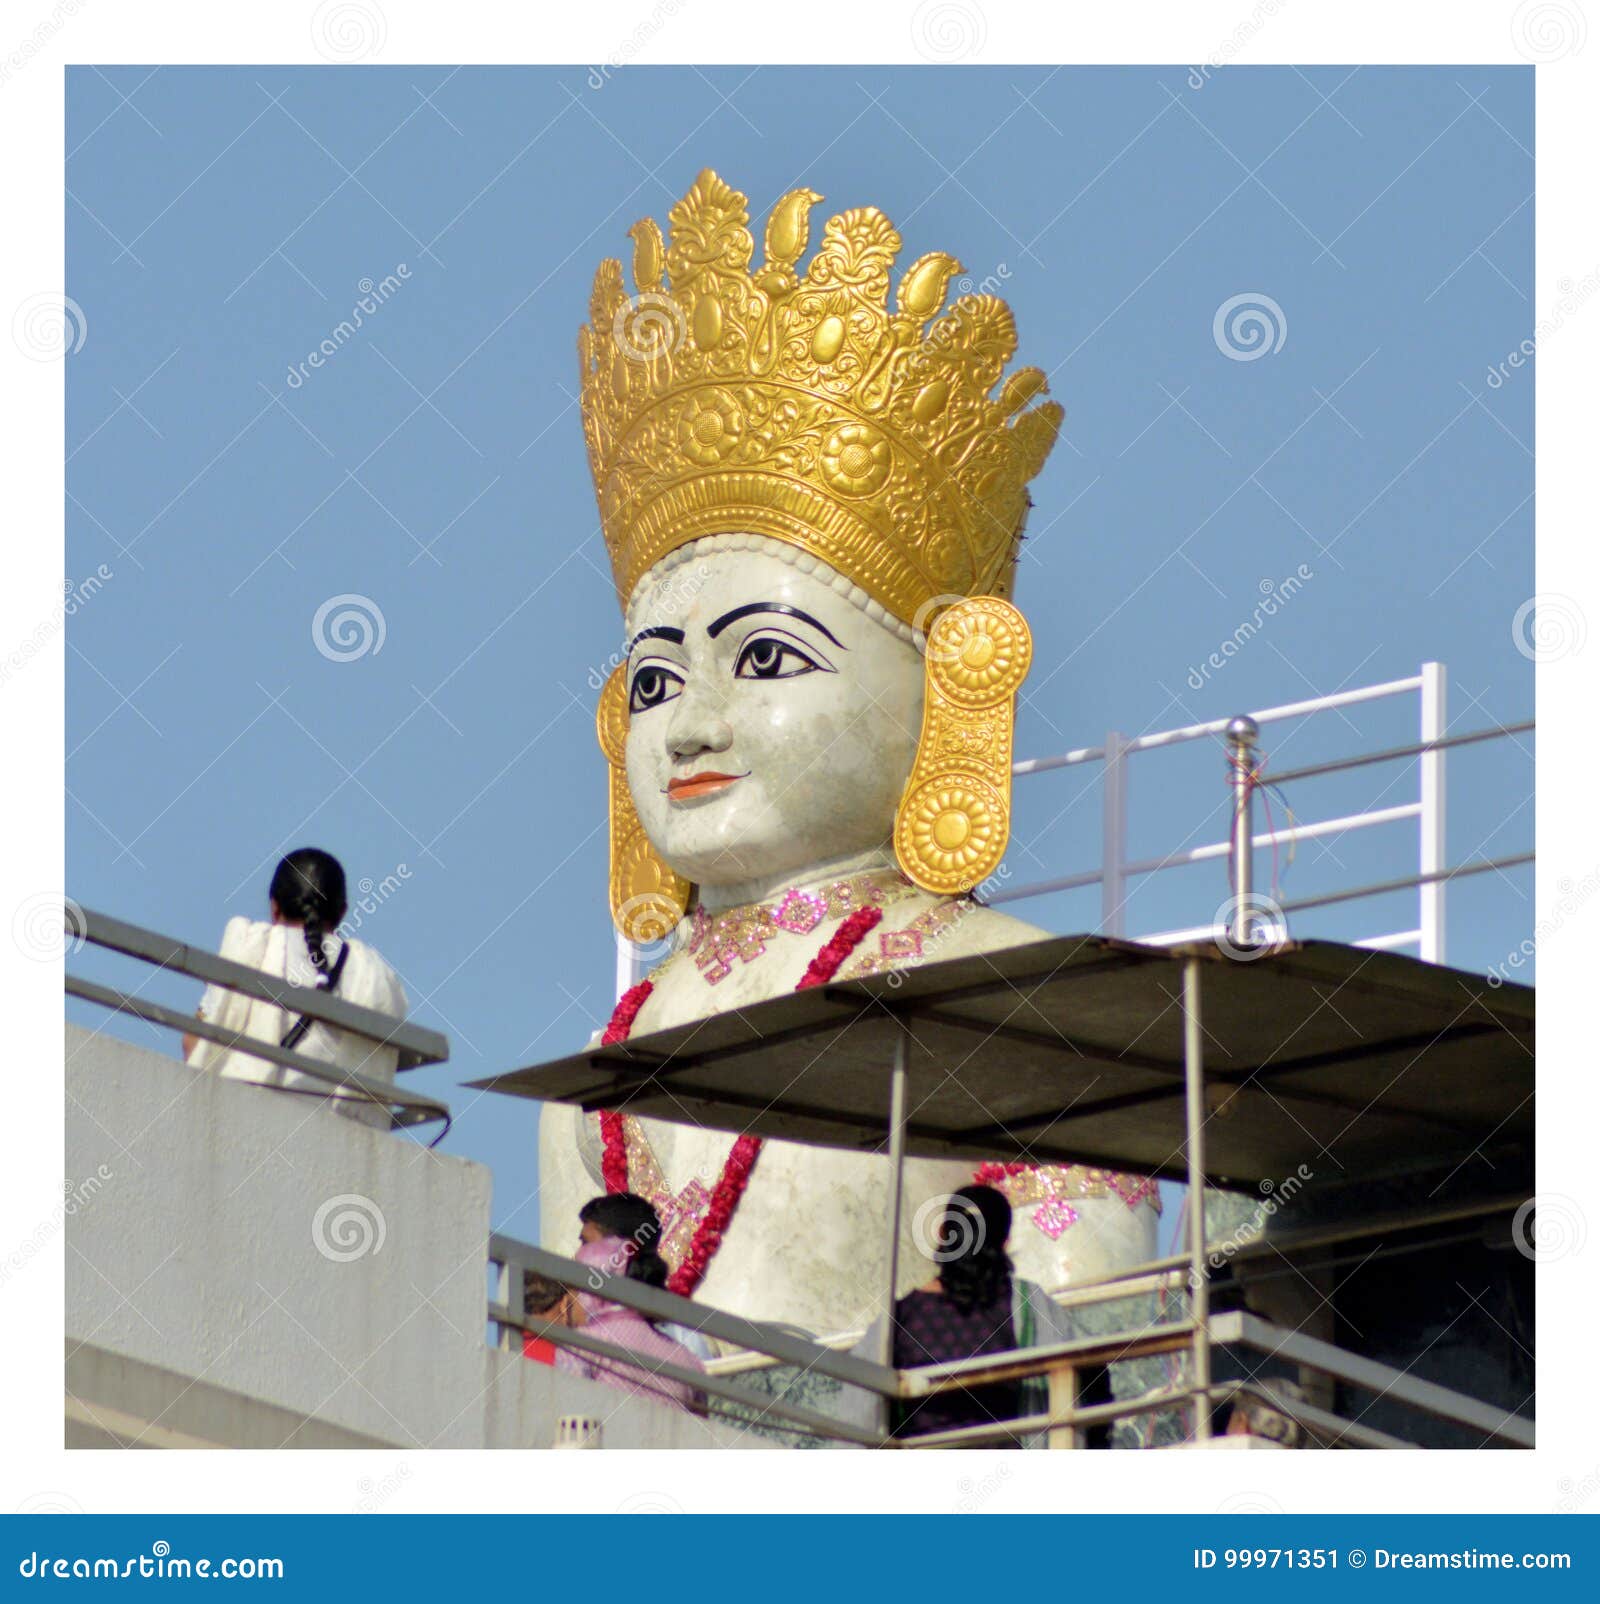 18,584 Jain Images, Stock Photos, 3D objects, & Vectors | Shutterstock